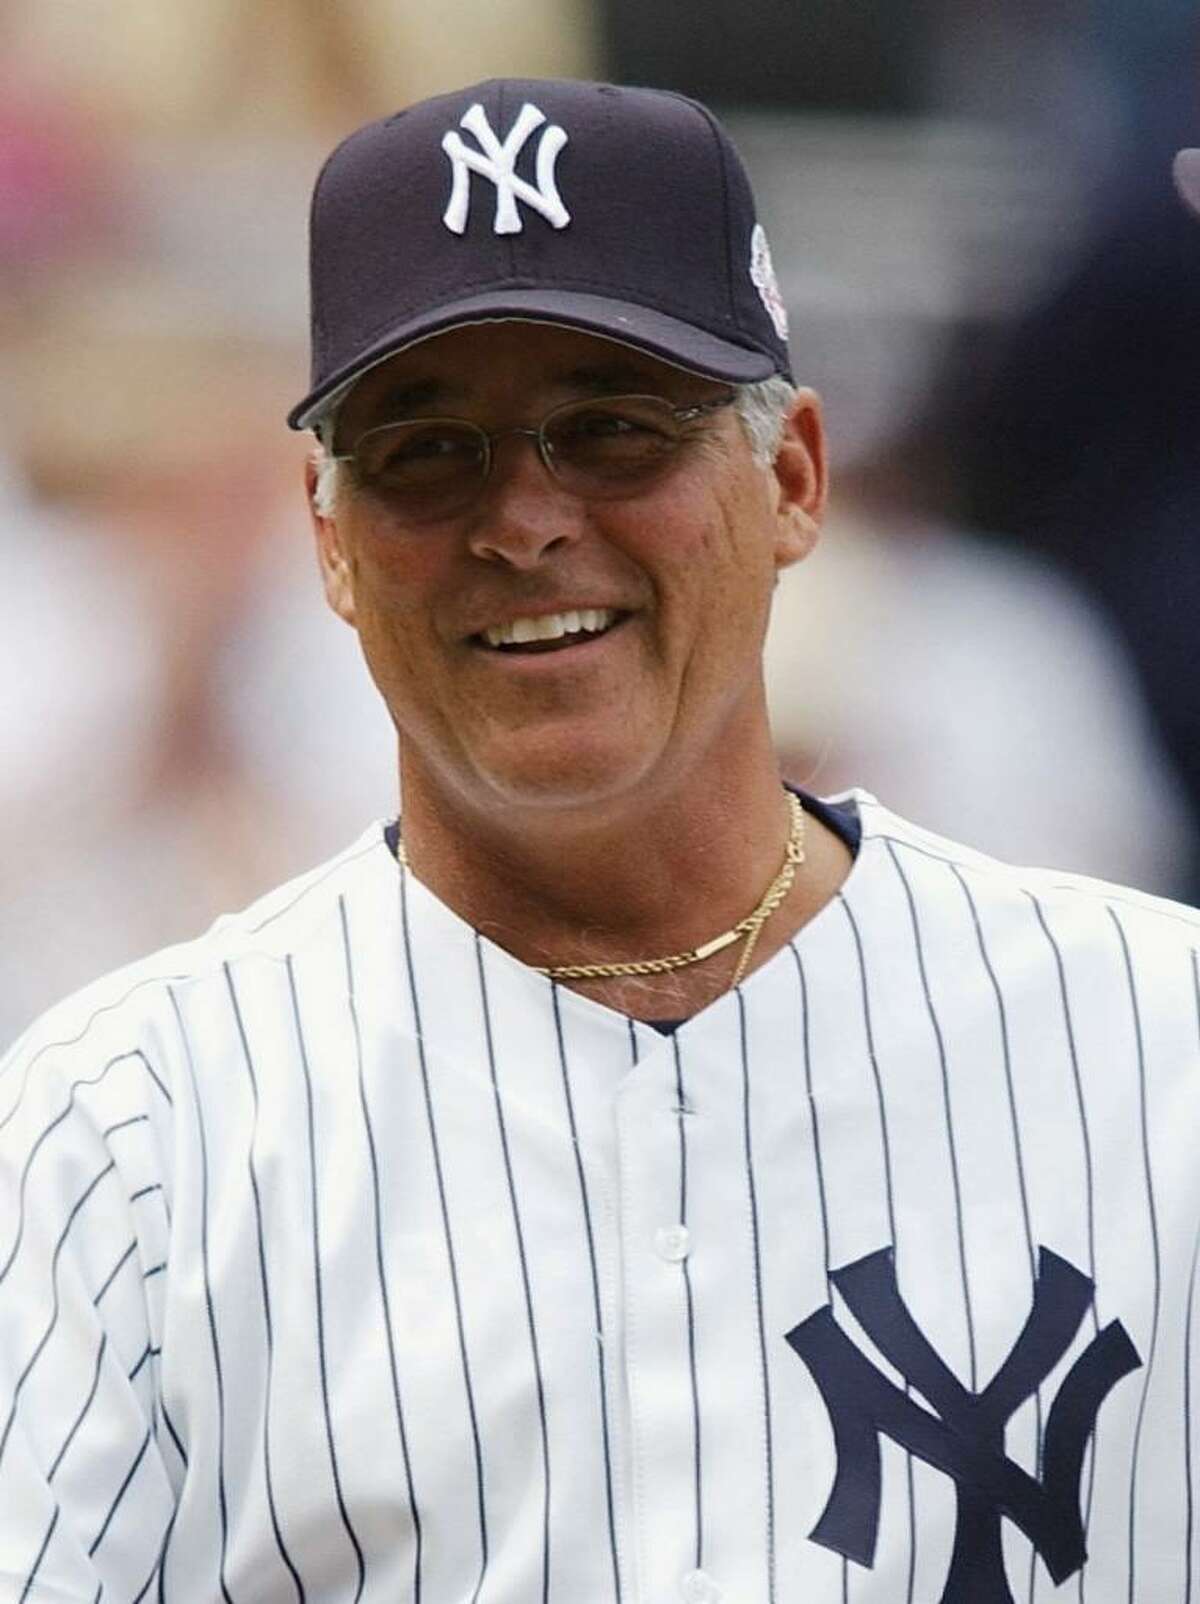 Former Yankee shortstop will headline sports gala